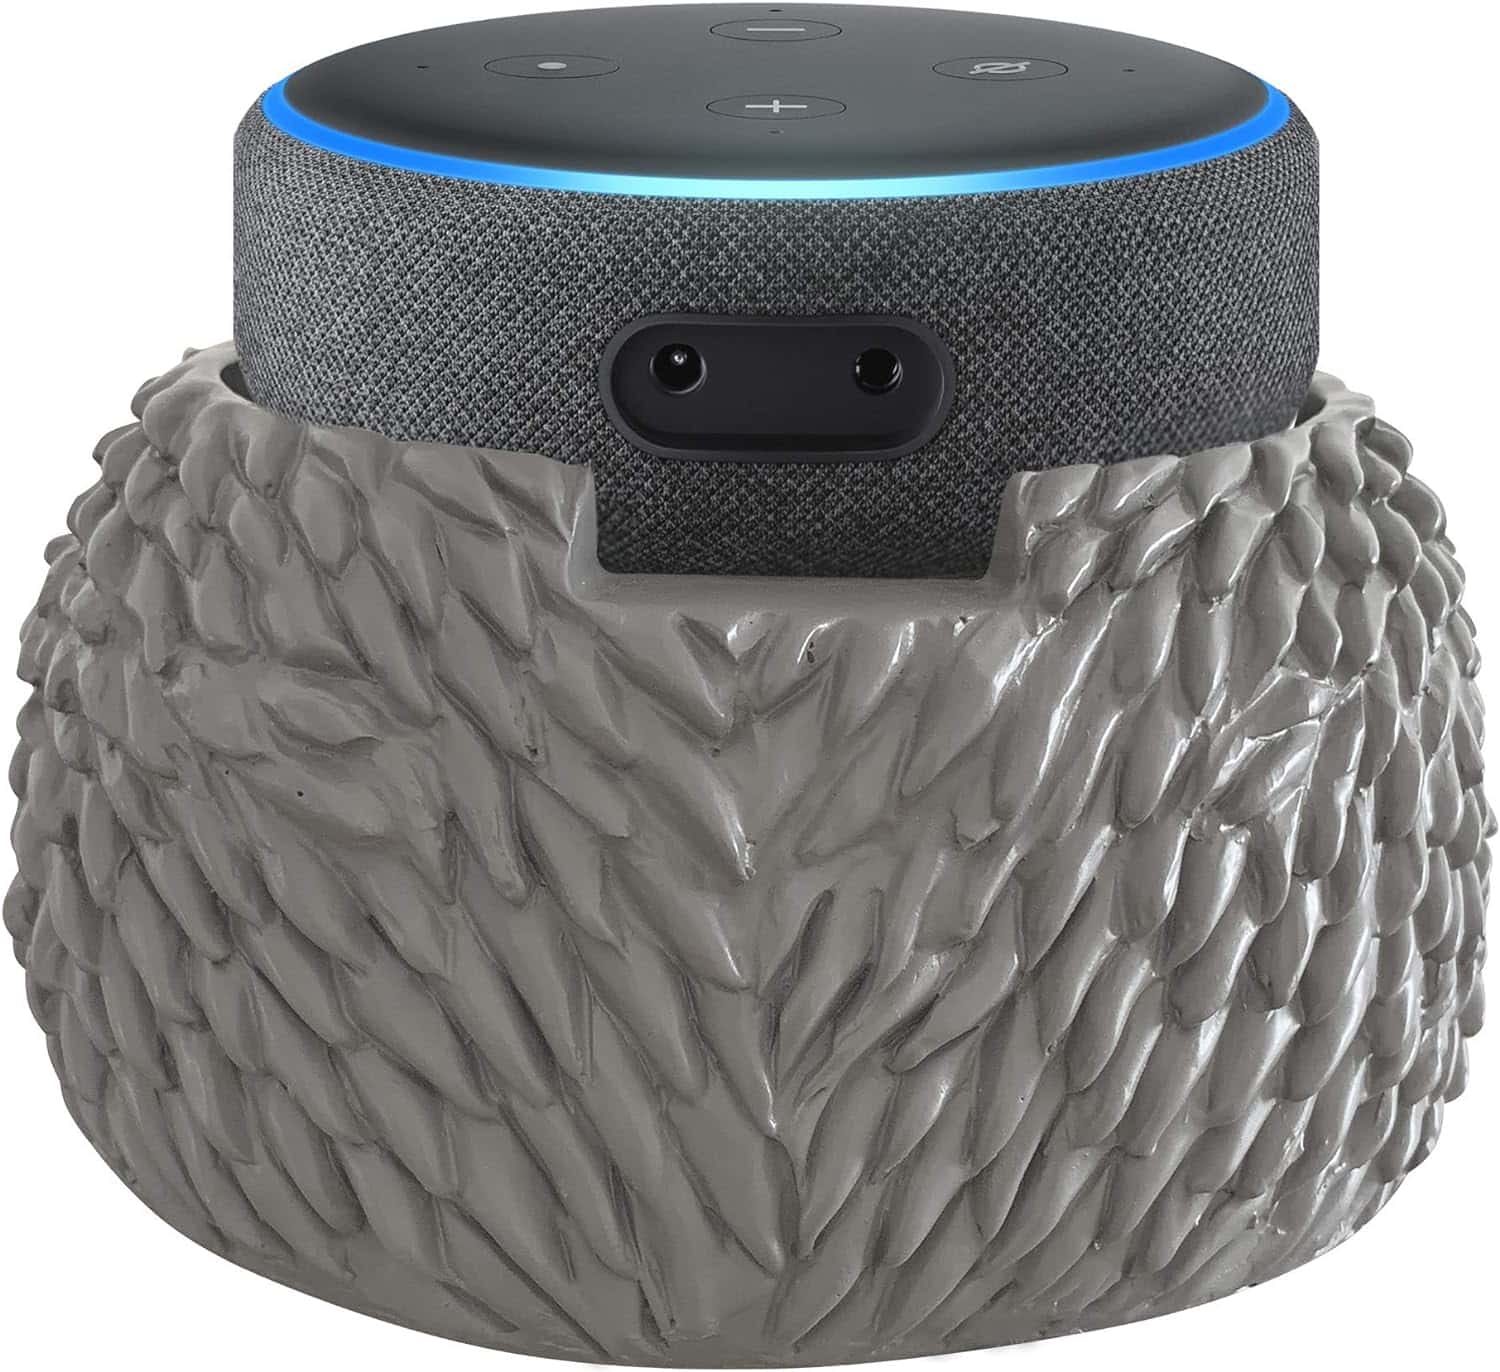 Dekodots Smart Speaker Table Stand (Hedgehog) - The Perfect Decorative Holder for Your Smart Speaker